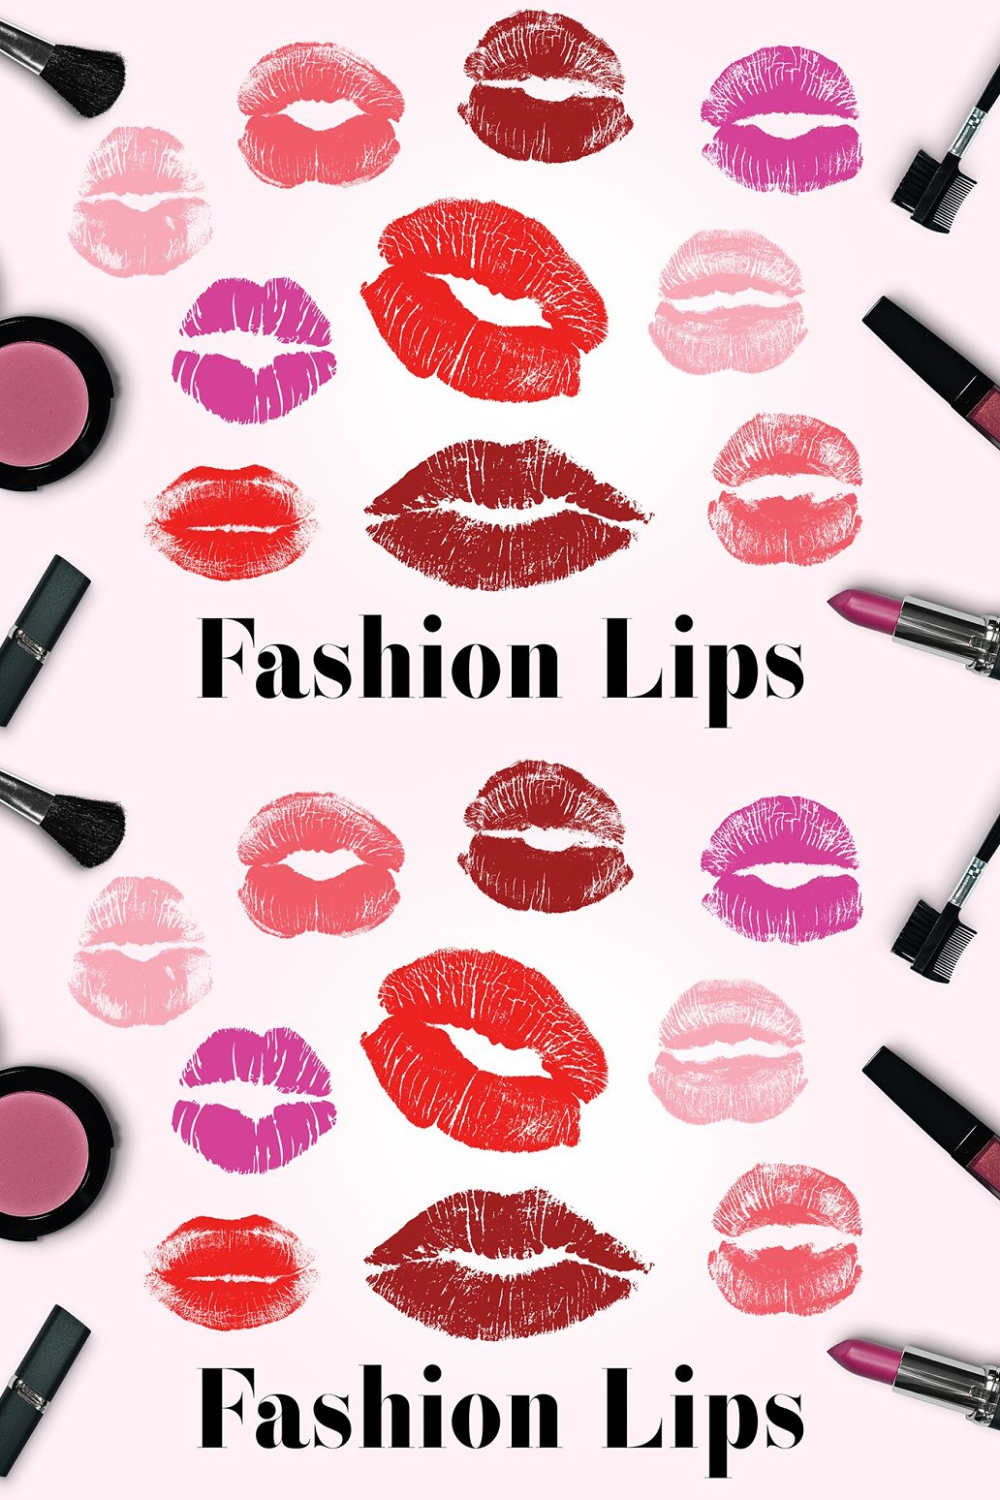 Fashion Lips Clipart, Kissing Lips - Pinterest.